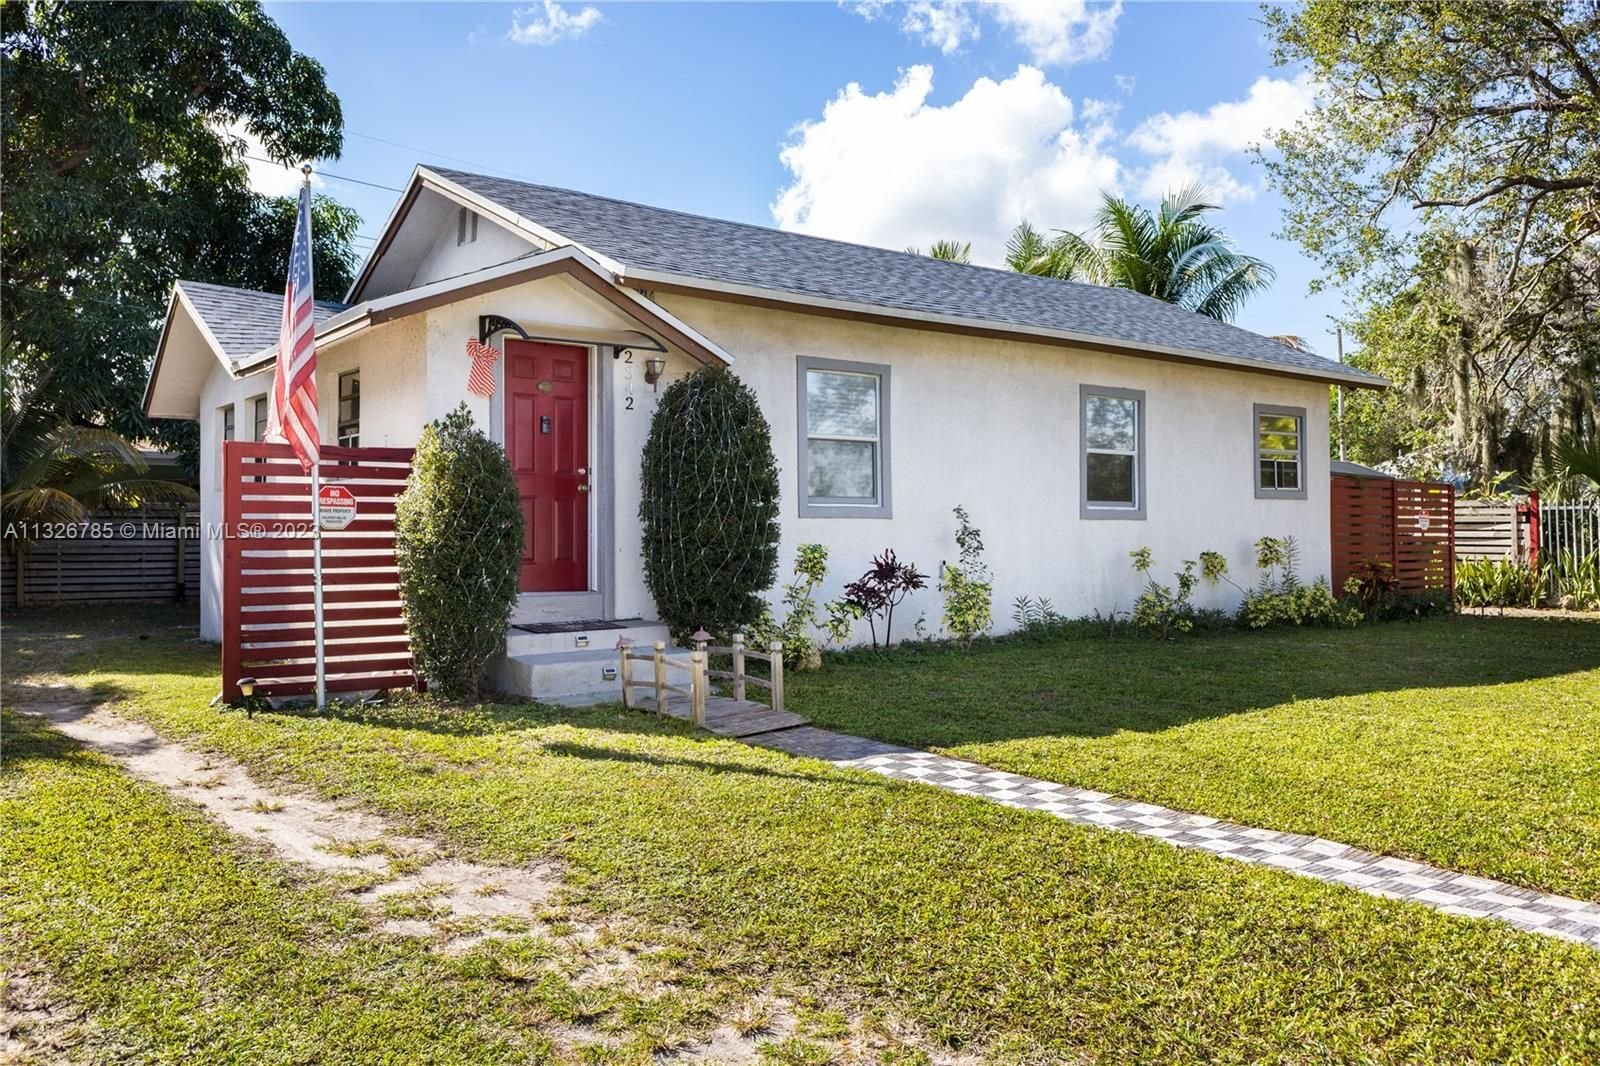 Real estate property located at 2342 89th St, Miami-Dade County, Miami, FL